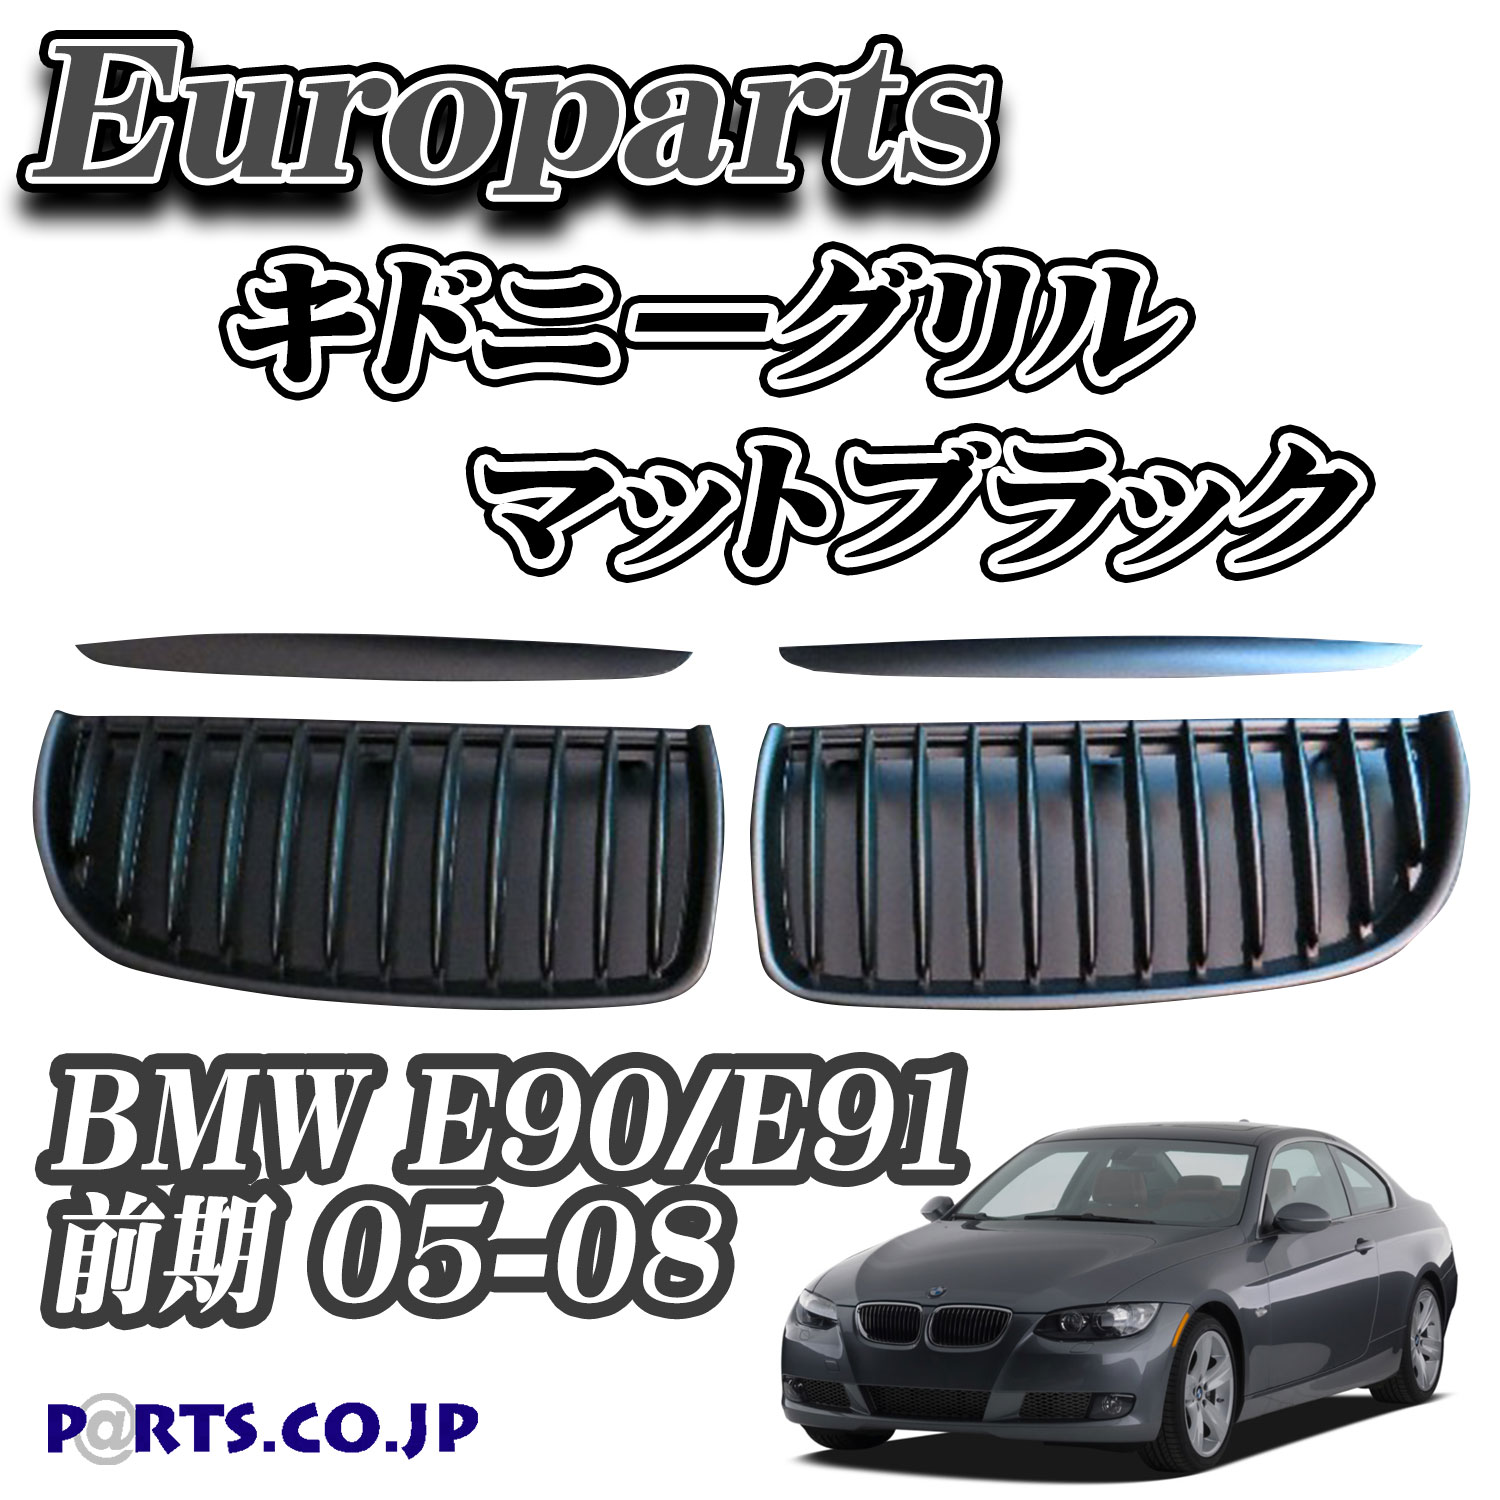 Europarts(ユーロパーツ) BMW E90/E91 前期 グリル キドニーグリル BMW E90/E91 前期 05-08 マットブラック